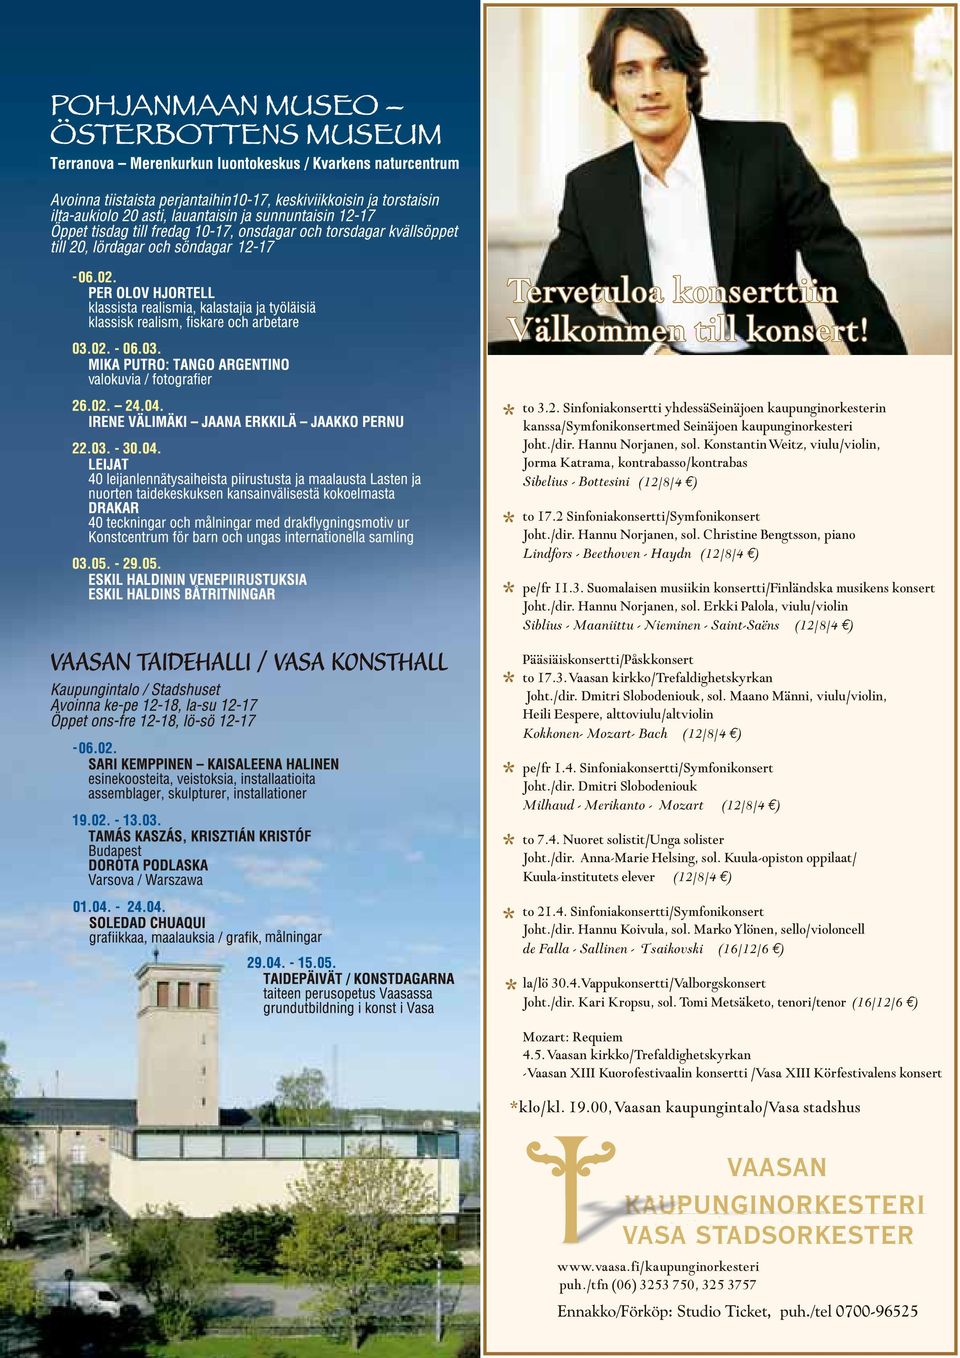 Christine Bengtsson, piano Lindfors - Beethoven - Haydn (12/8/4 E) pe/fr 11.3. Suomalaisen musiikin konsertti/finländska musikens konsert Joht./dir. Hannu Norjanen, sol.